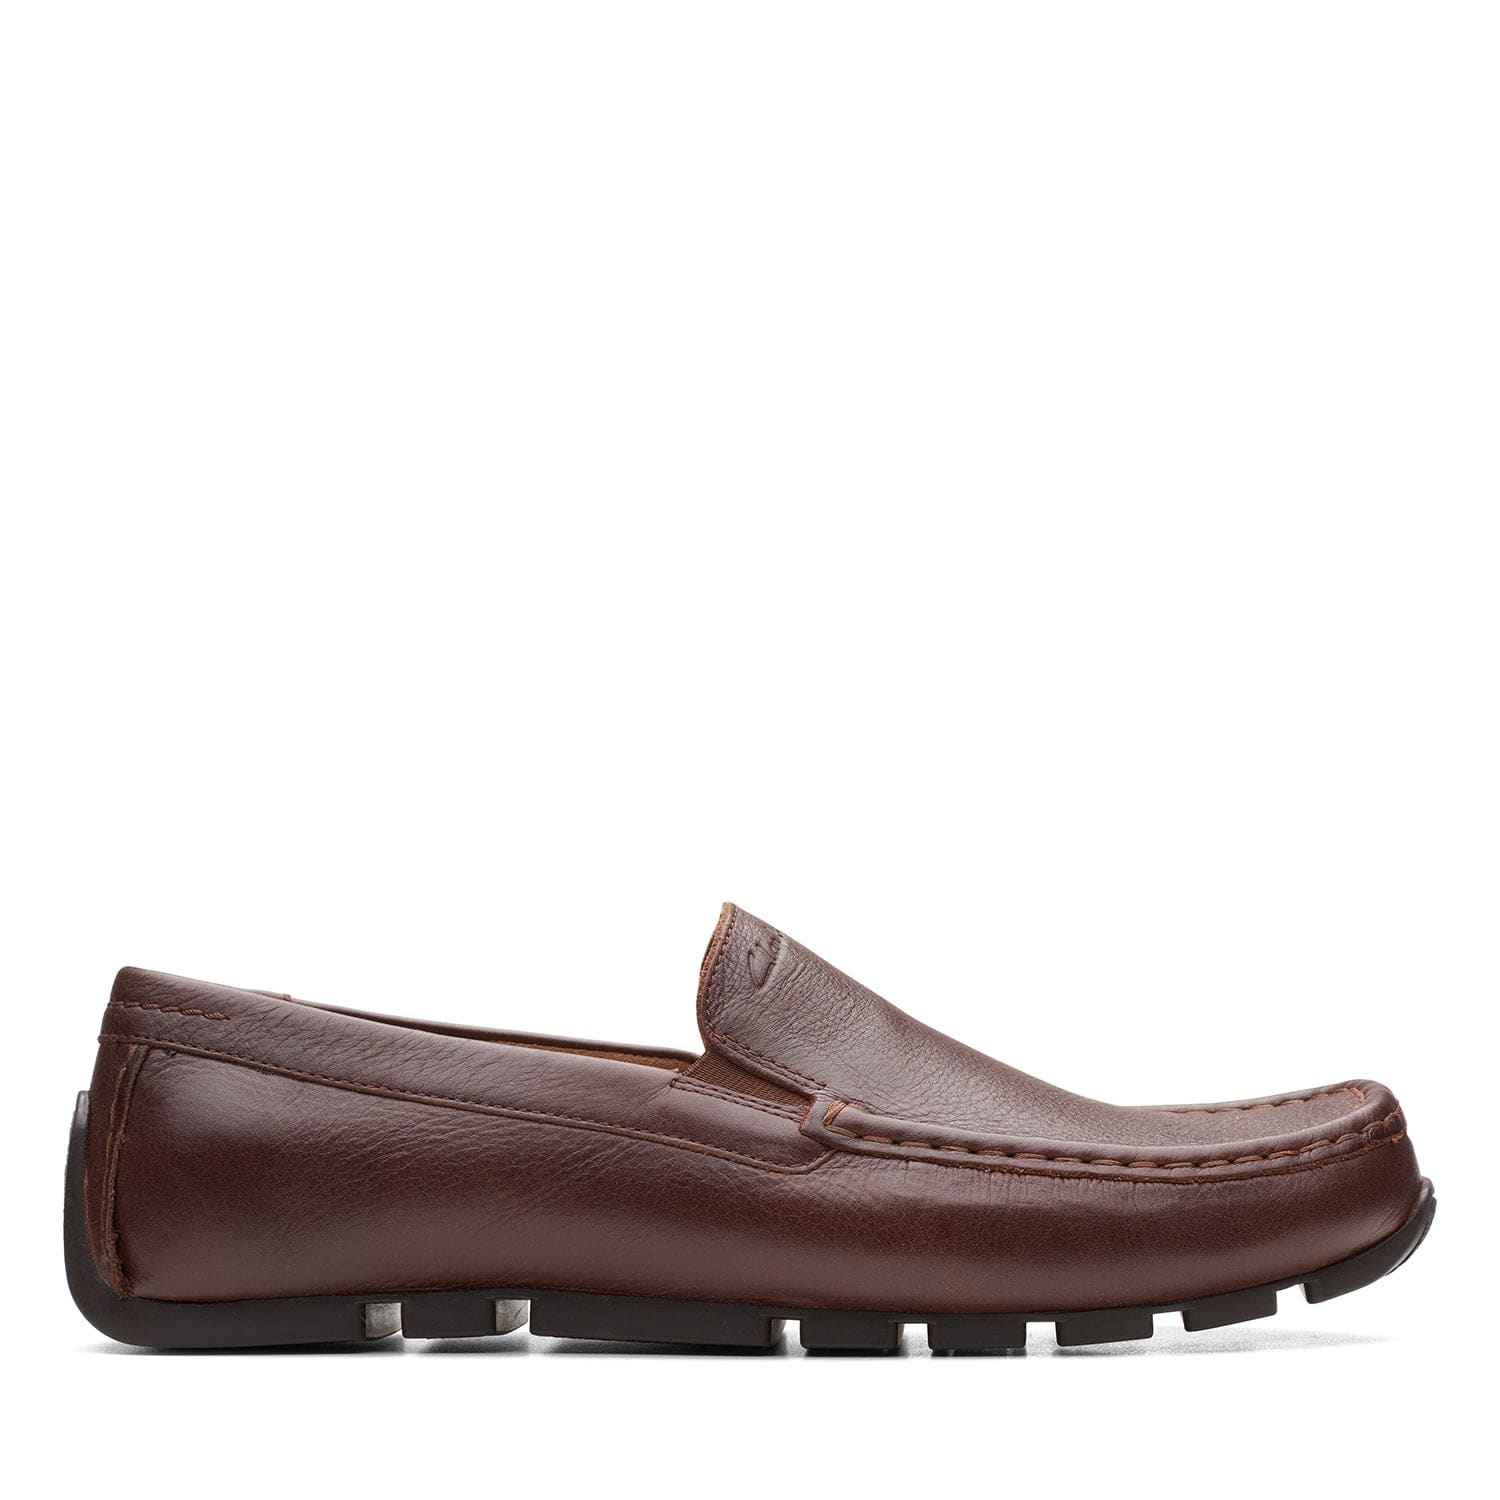 Clarks Oswick Plain Shoes - Dark Tan Lea - 261666837 - G Width (Standard Fit)